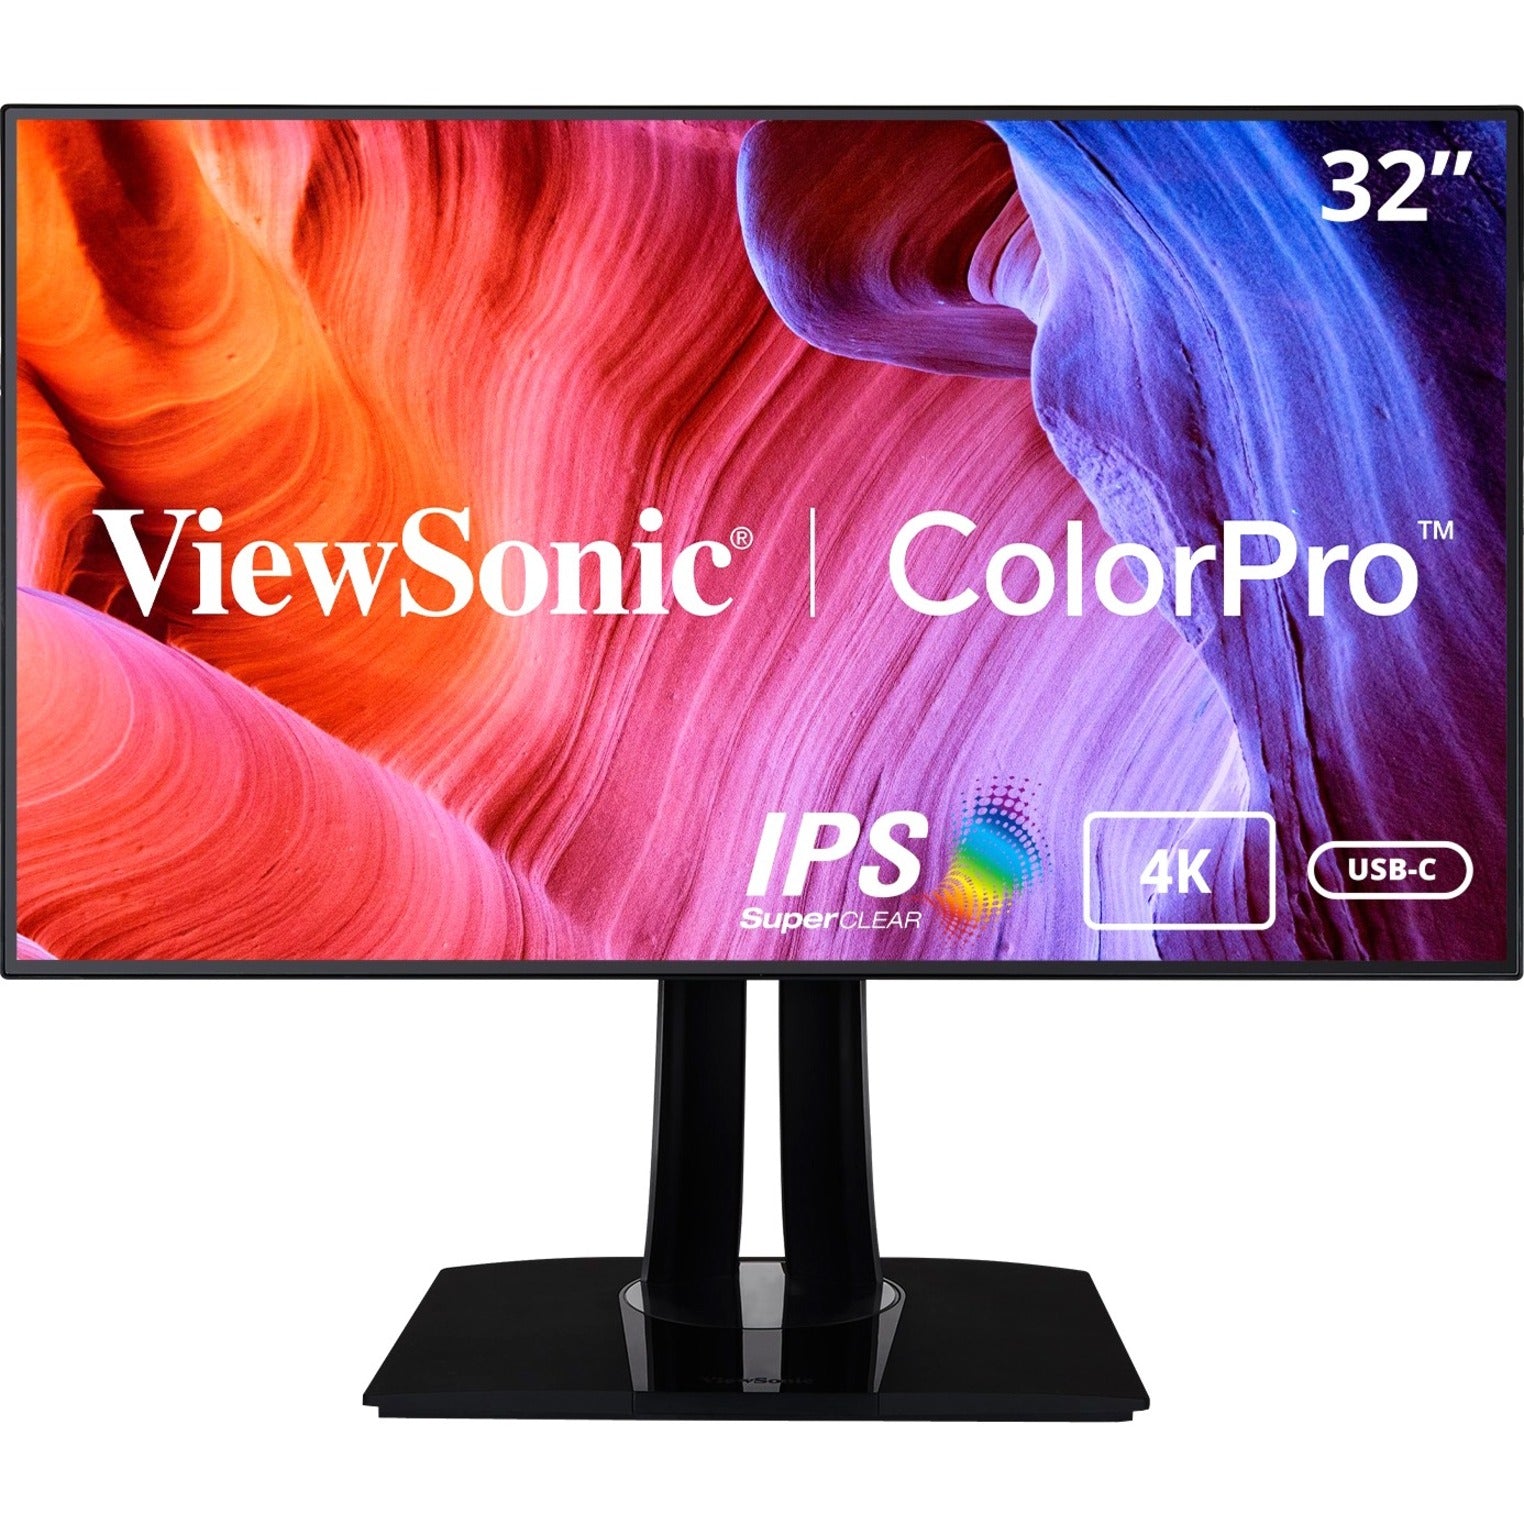 ViewSonic VP3268A-4K ColorPro Design Monitor, 32 4K UHD, USB-C, 3840 x 2160 Resolution